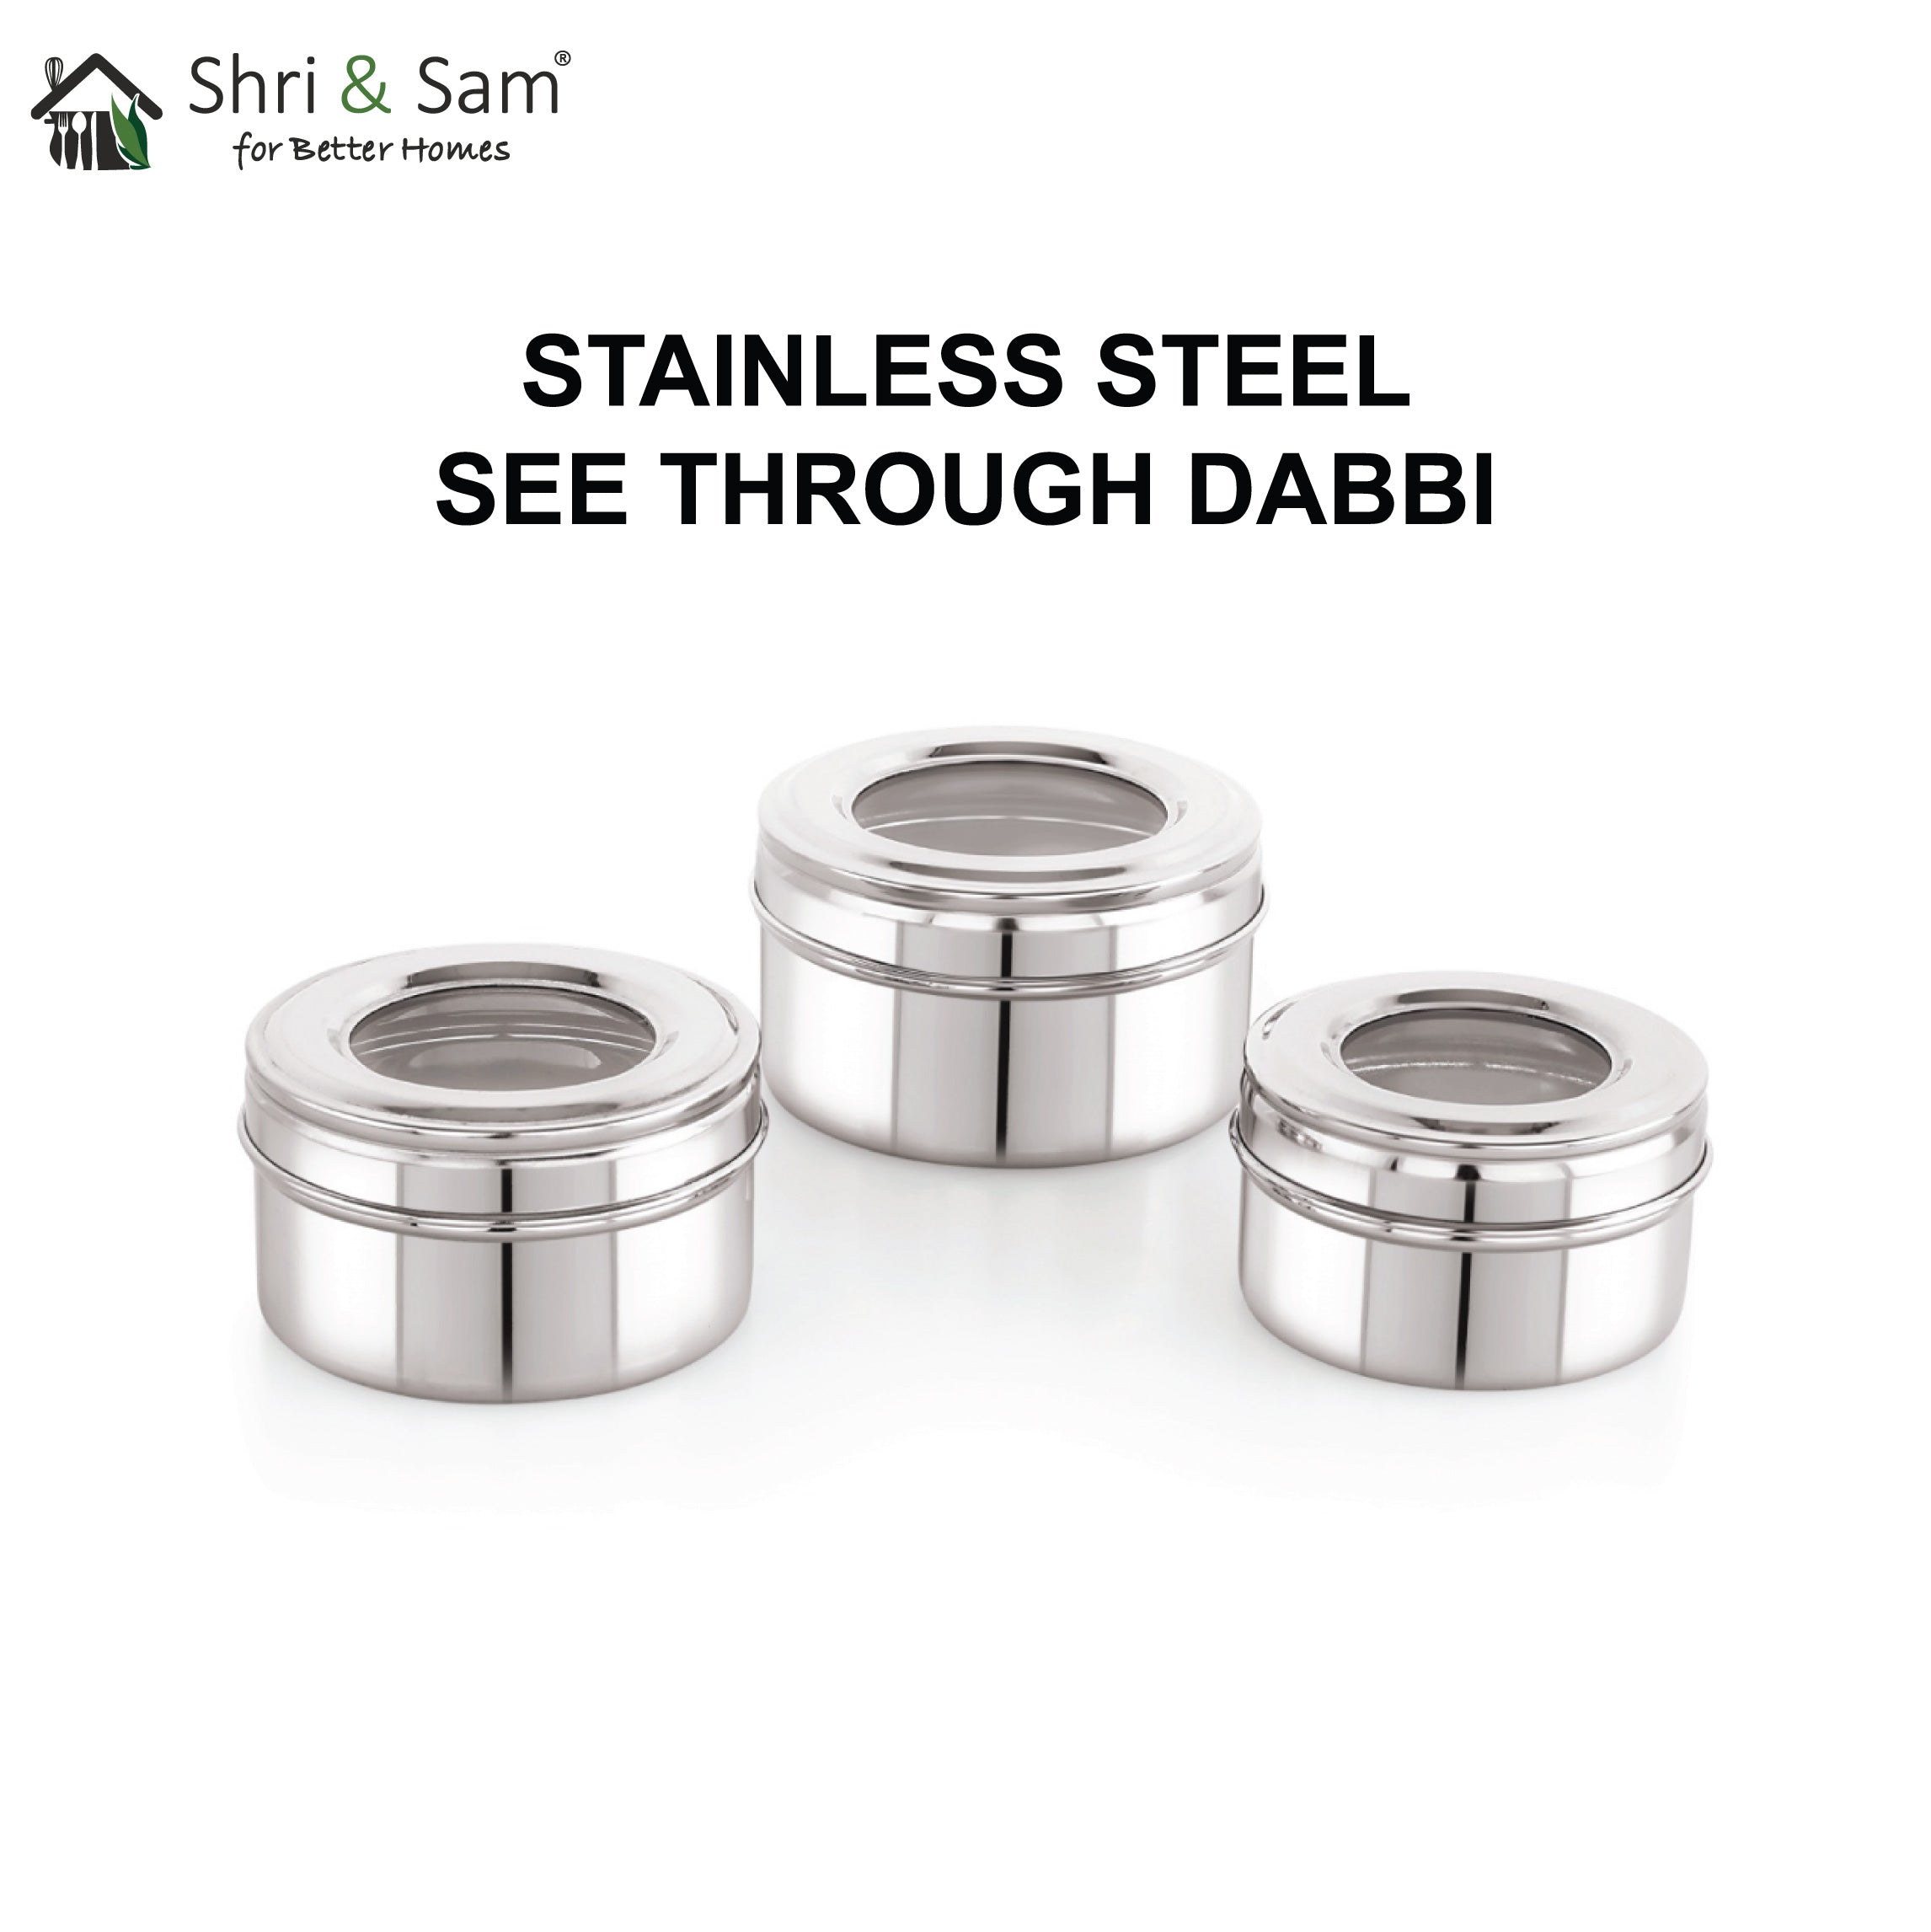 Stainless Steel 3 PCS See Through Dabbi